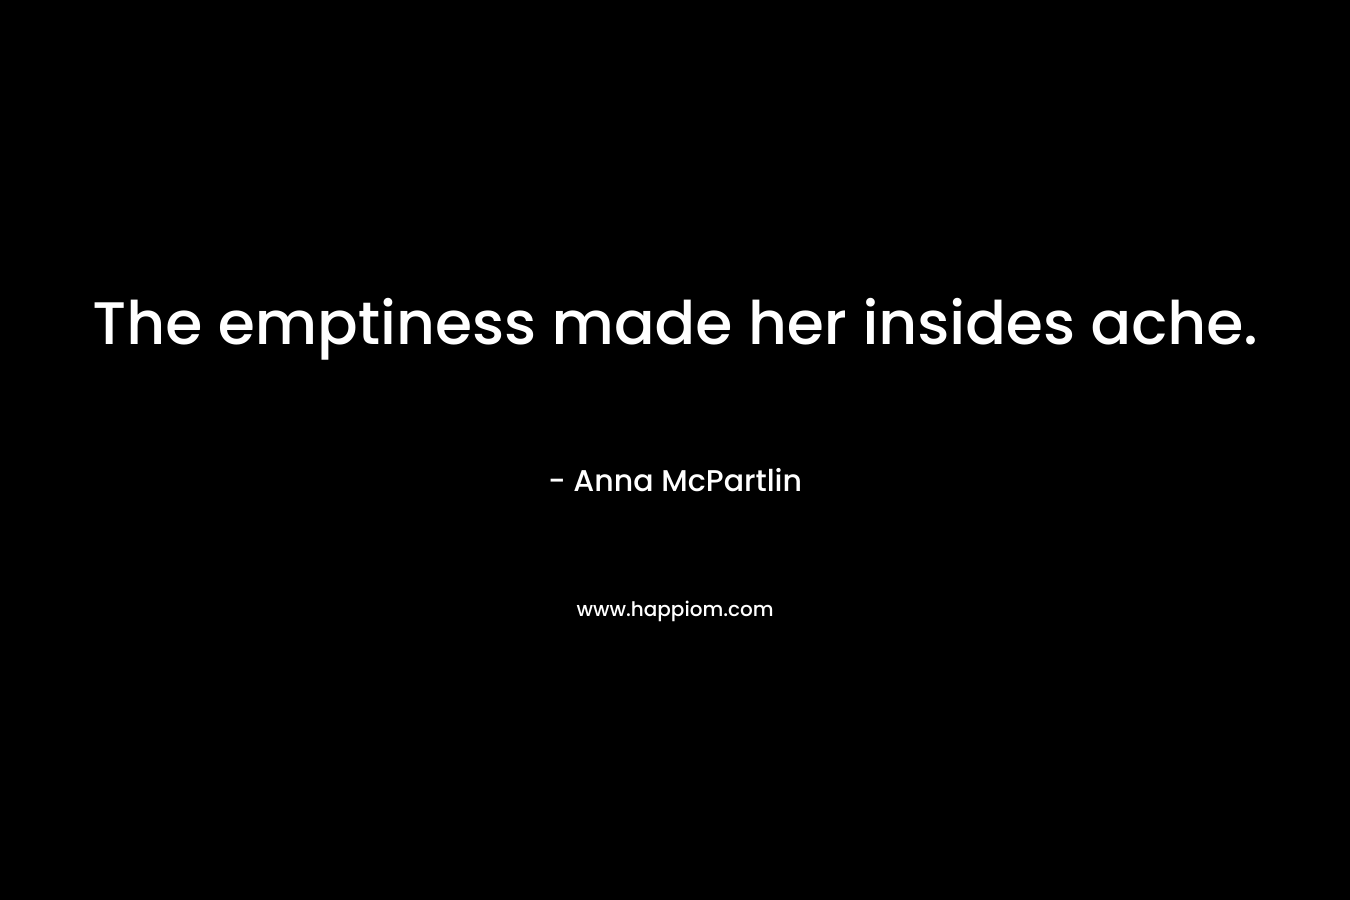 The emptiness made her insides ache. – Anna McPartlin